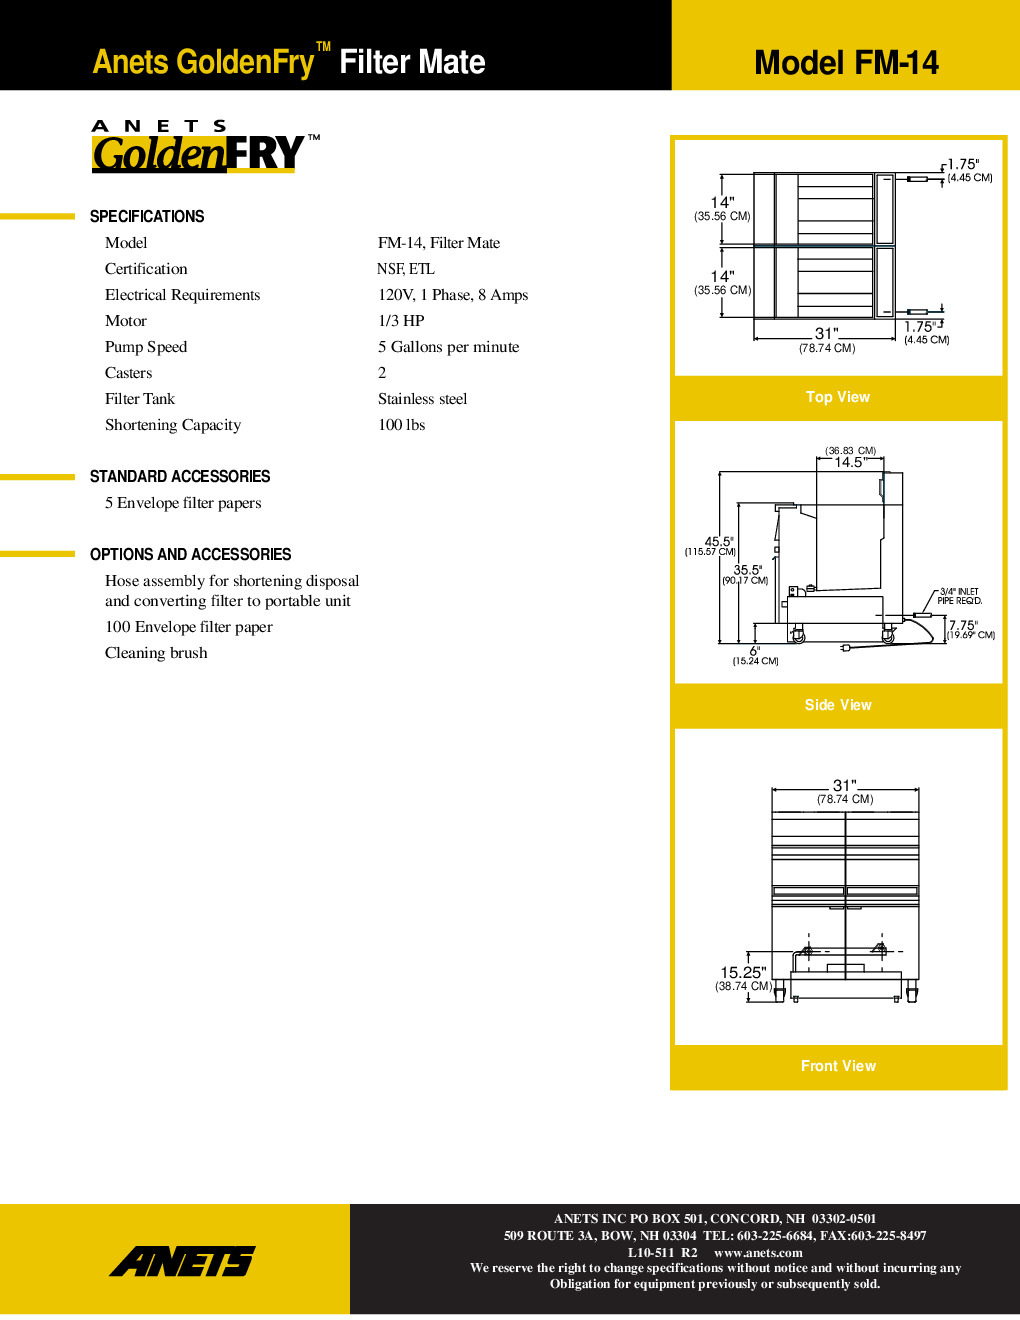 ANETS FM-14-5 Built-In Fryer Filter Drawer Design w/ 100-Lb Capacity, Filter Starter Kit, 5 GPM